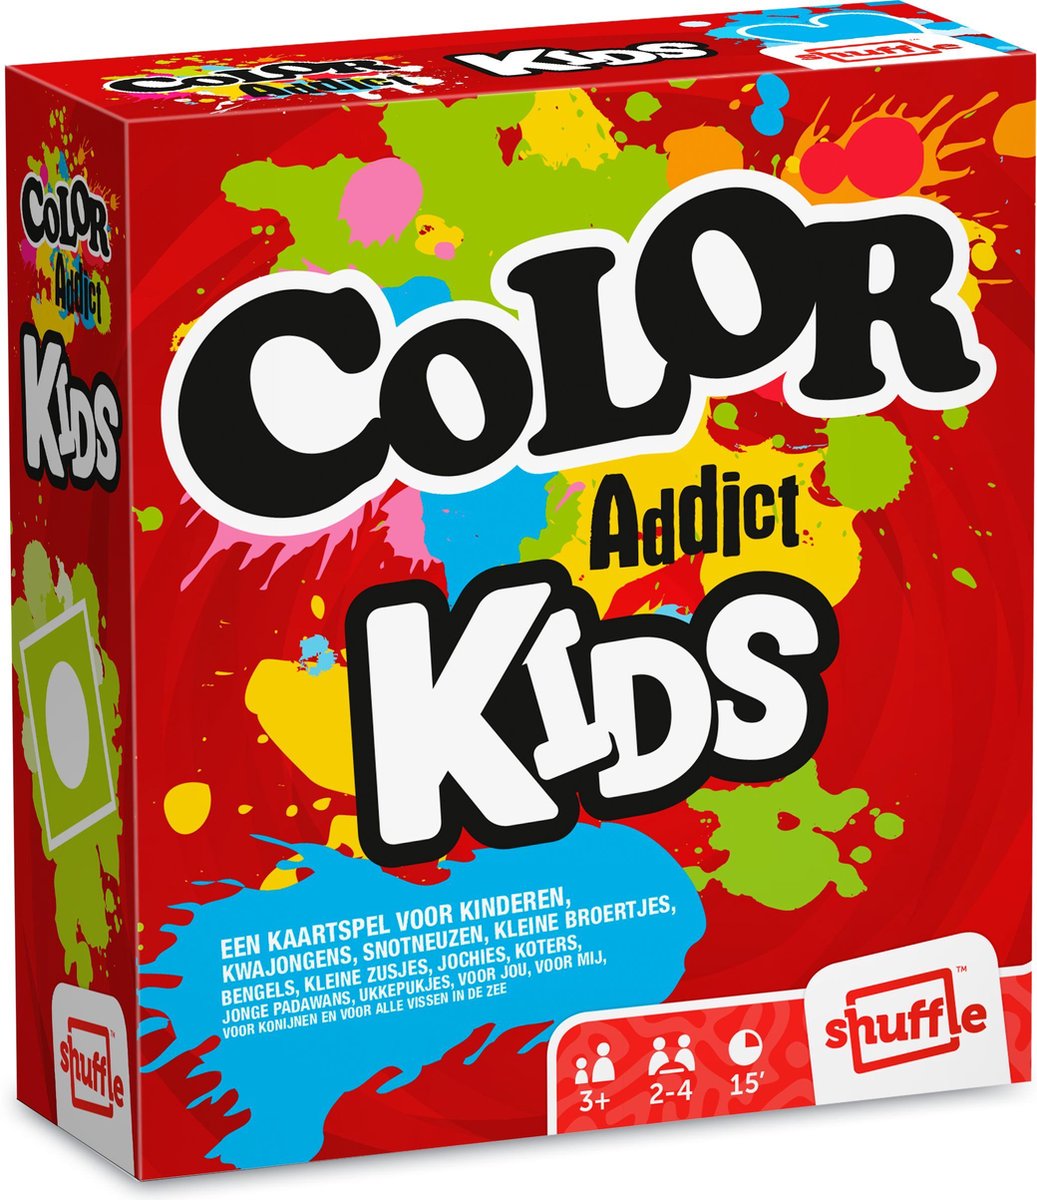 Shuffle kaartspel Color Addict Kids 12.5 x 11.5 x 4.5 cm karton - Rood